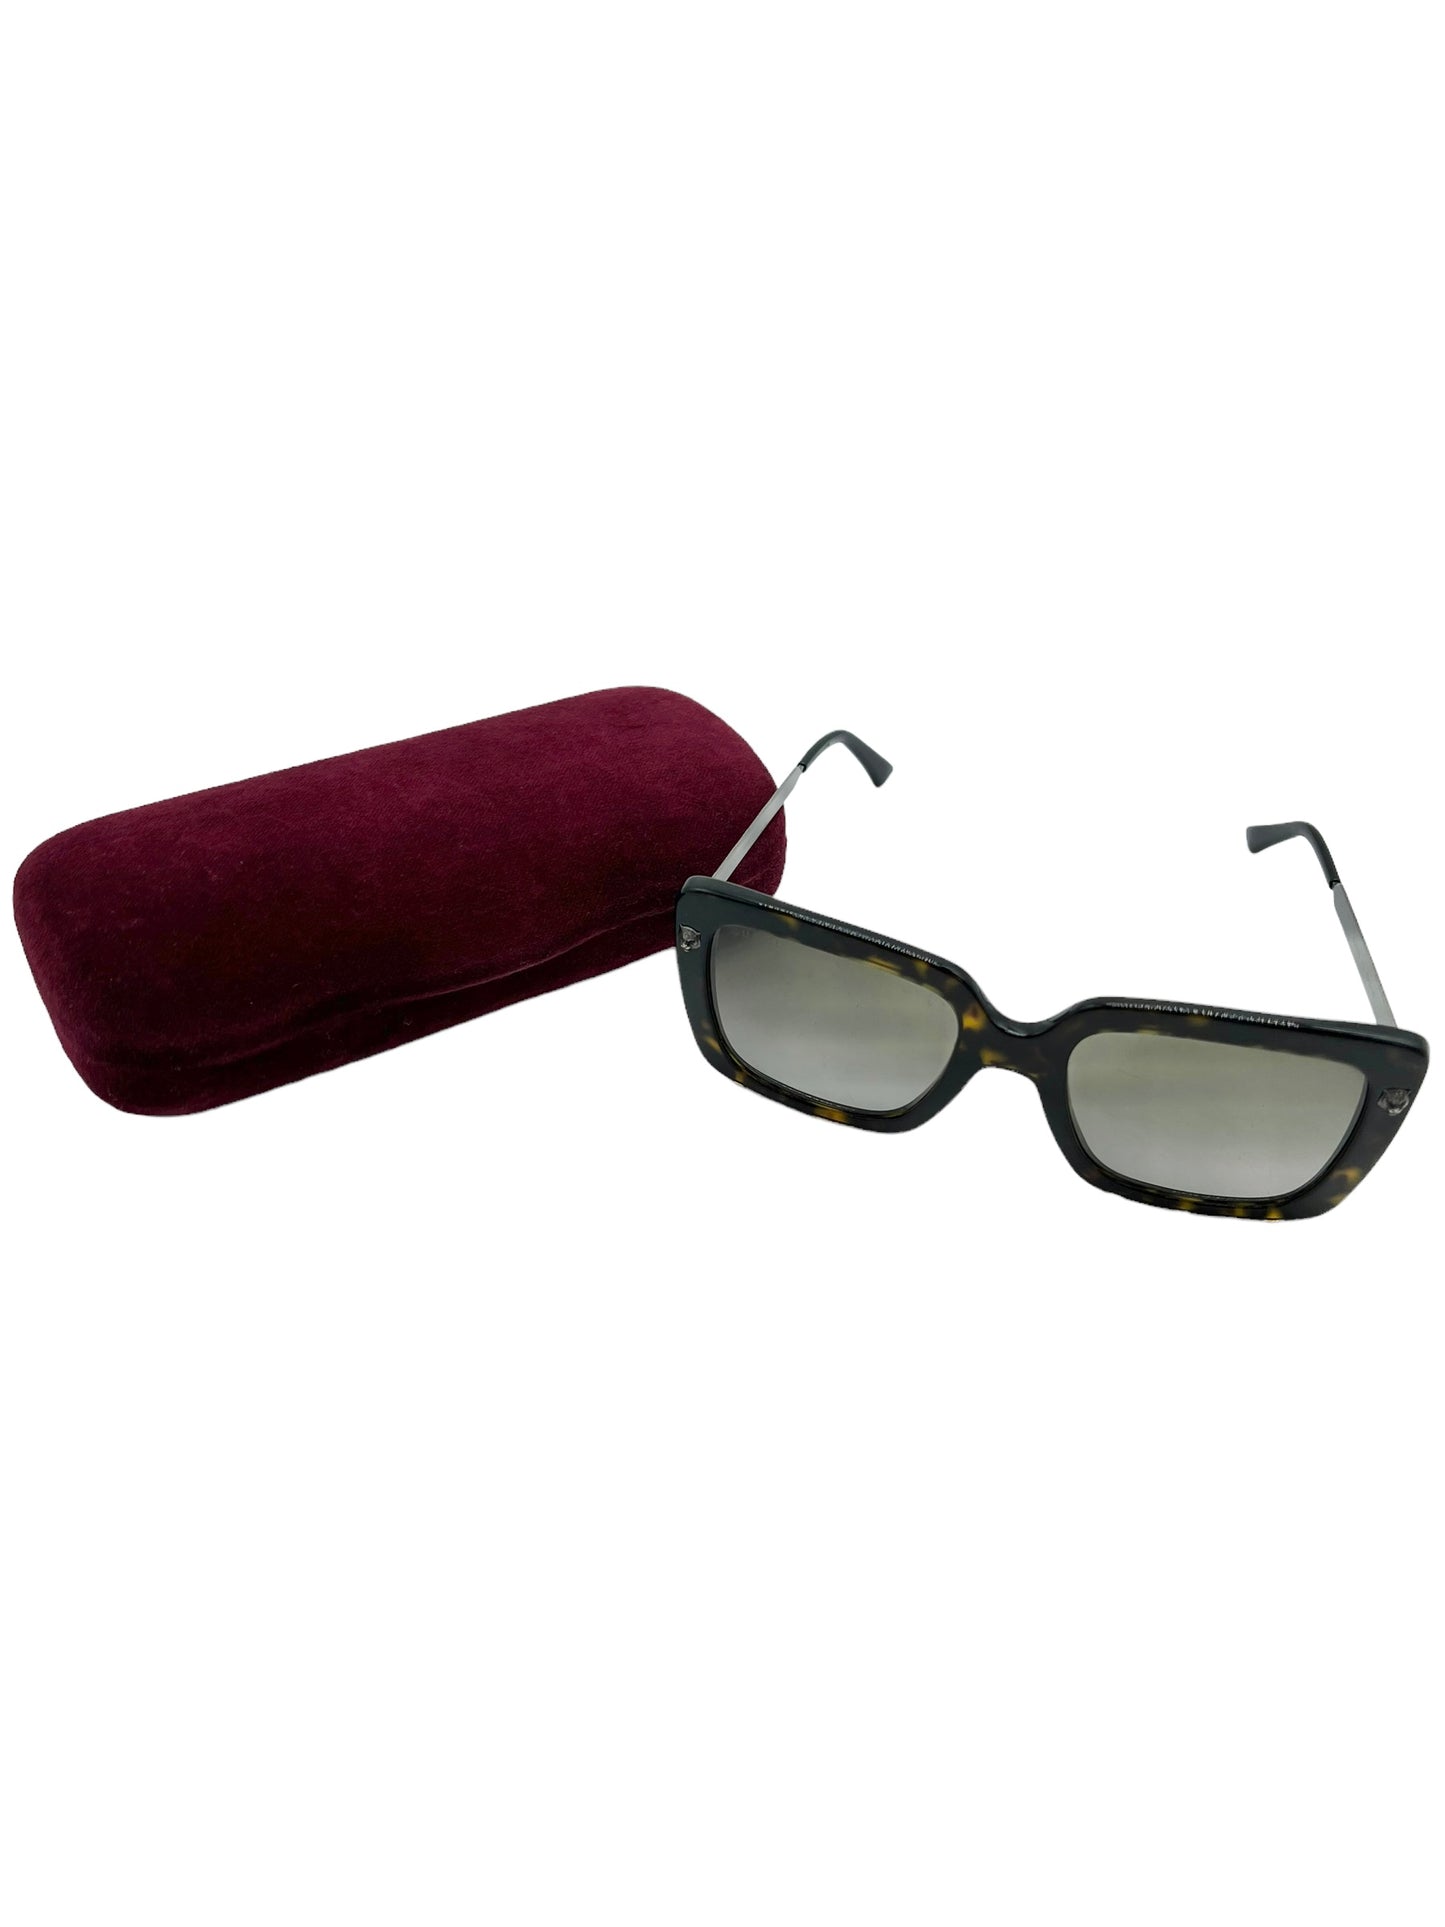 Gucci Tortoise Oversize GG0216S Sunglasses